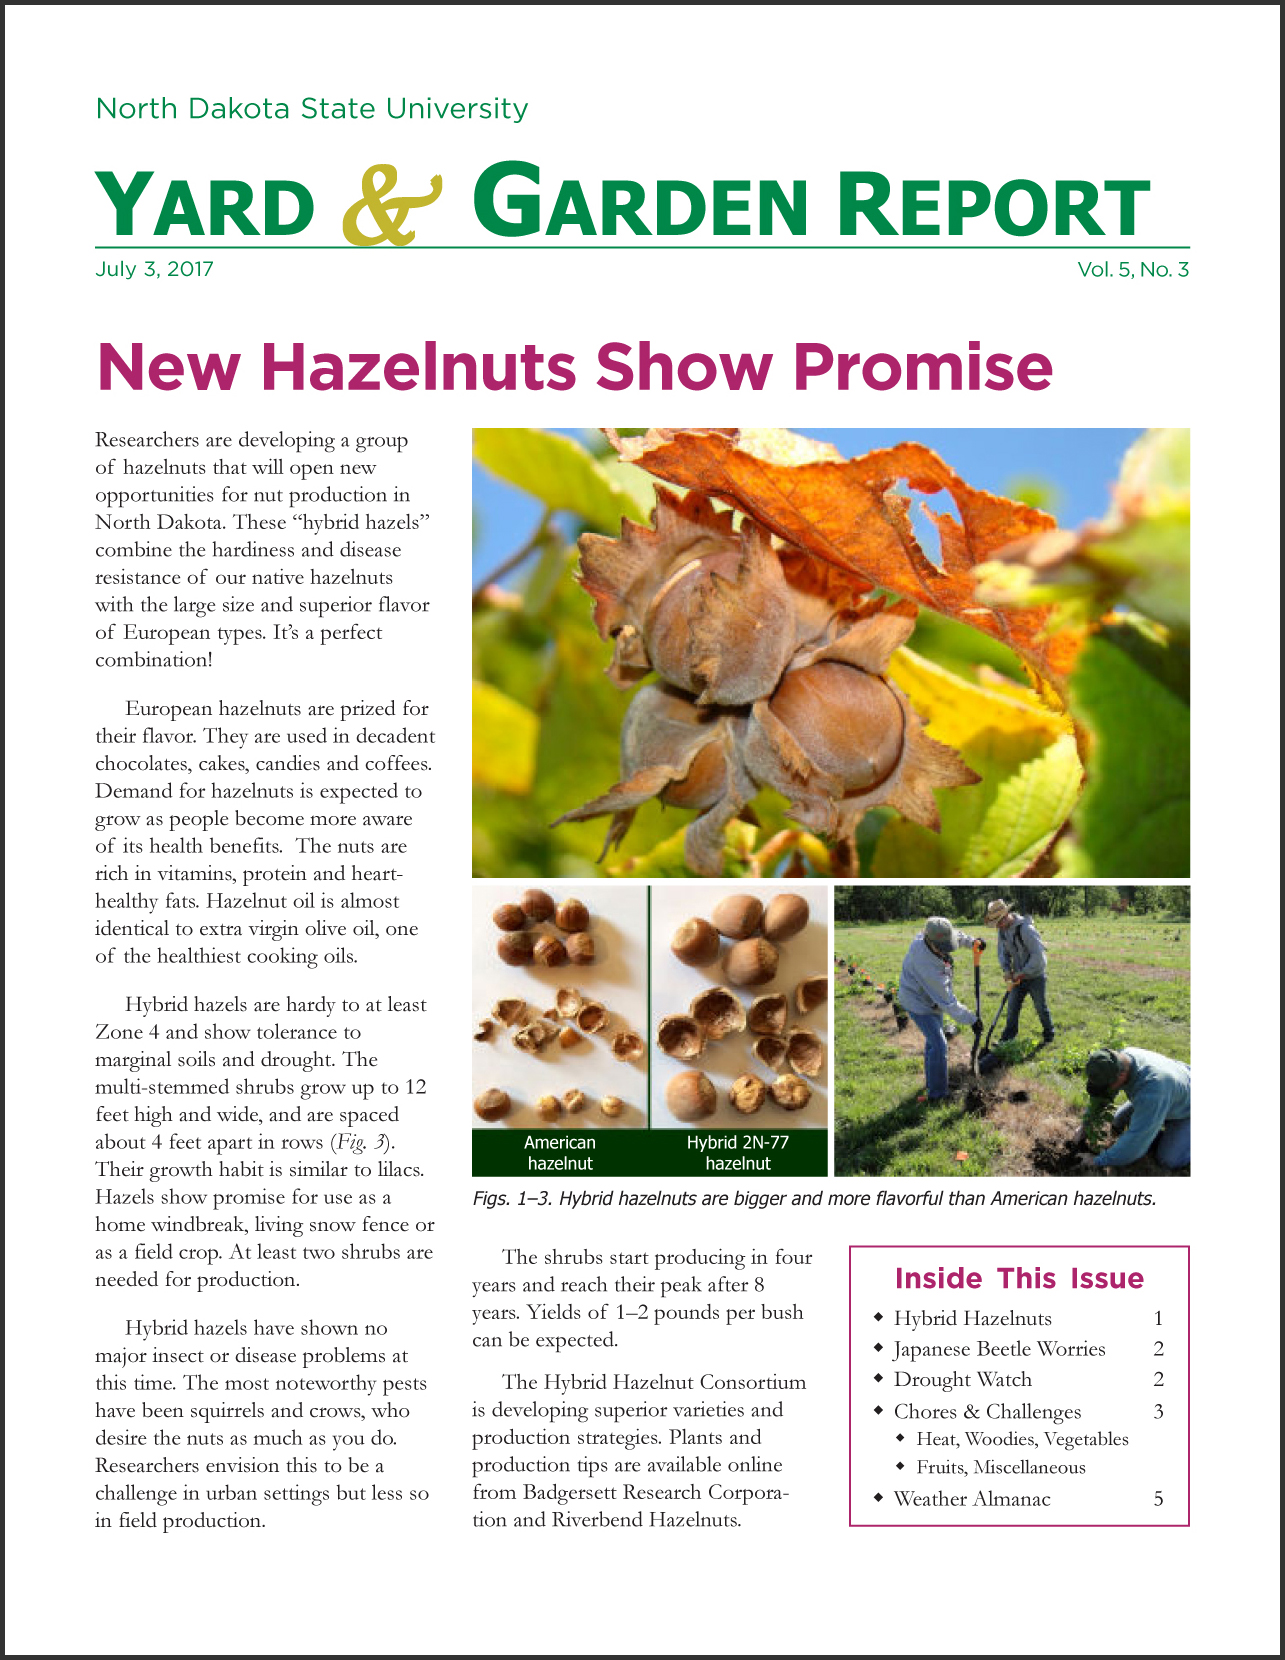 NDSU Yard & Garden Report for July 3, 2017